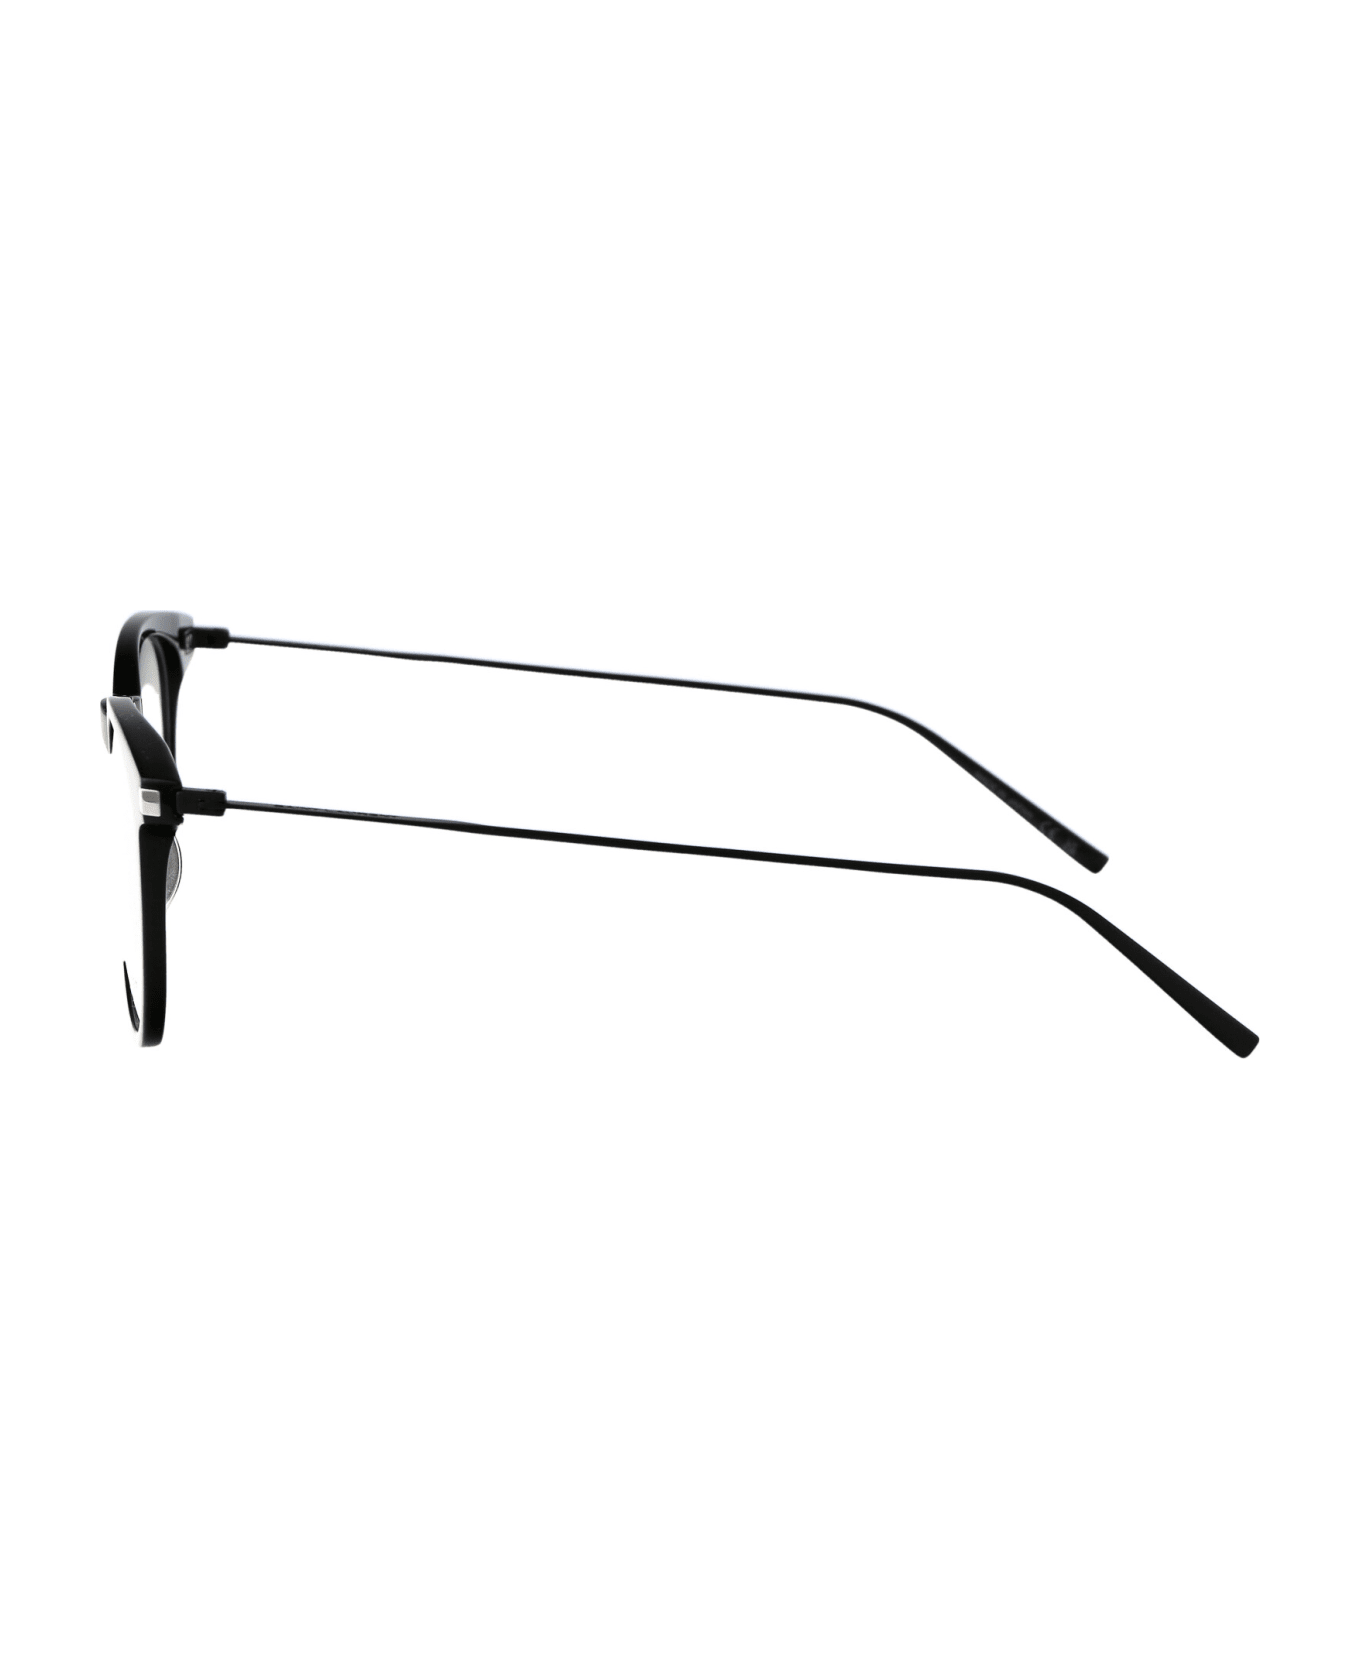 Saint Laurent Eyewear Sl 579 Glasses - 001 BLACK BLACK TRANSPARENT